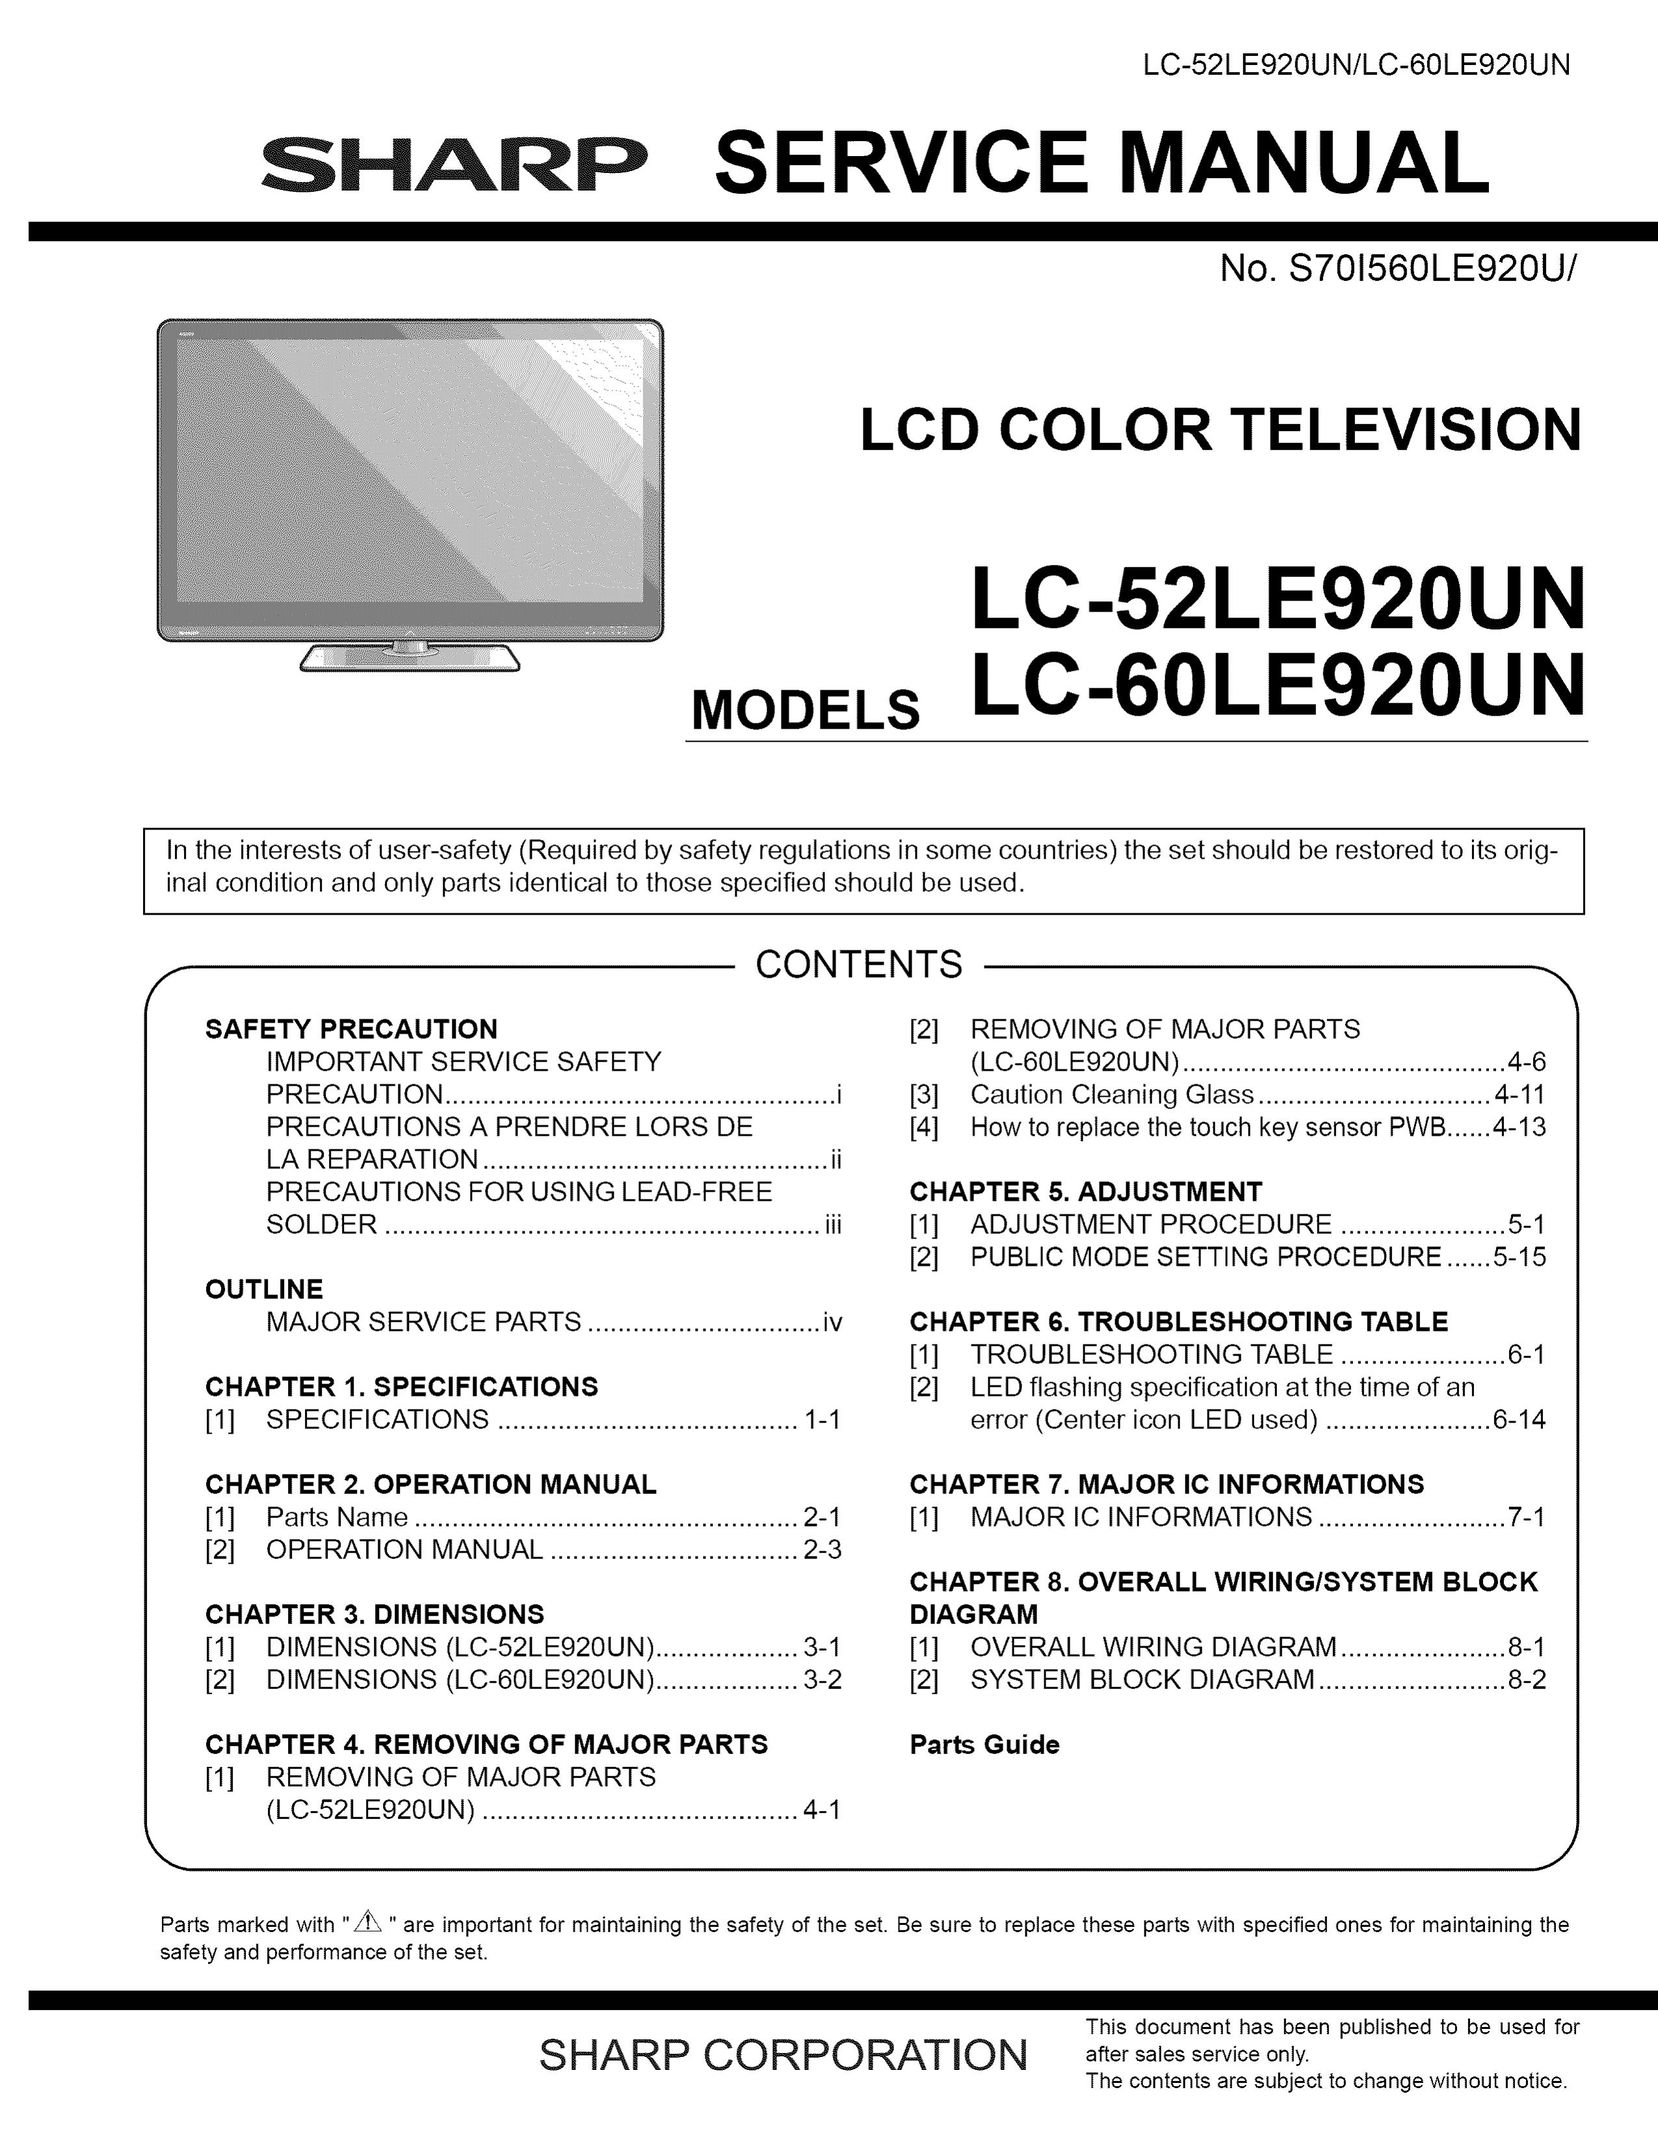 Sharp 52LE920UN Flat Panel Television User Manual